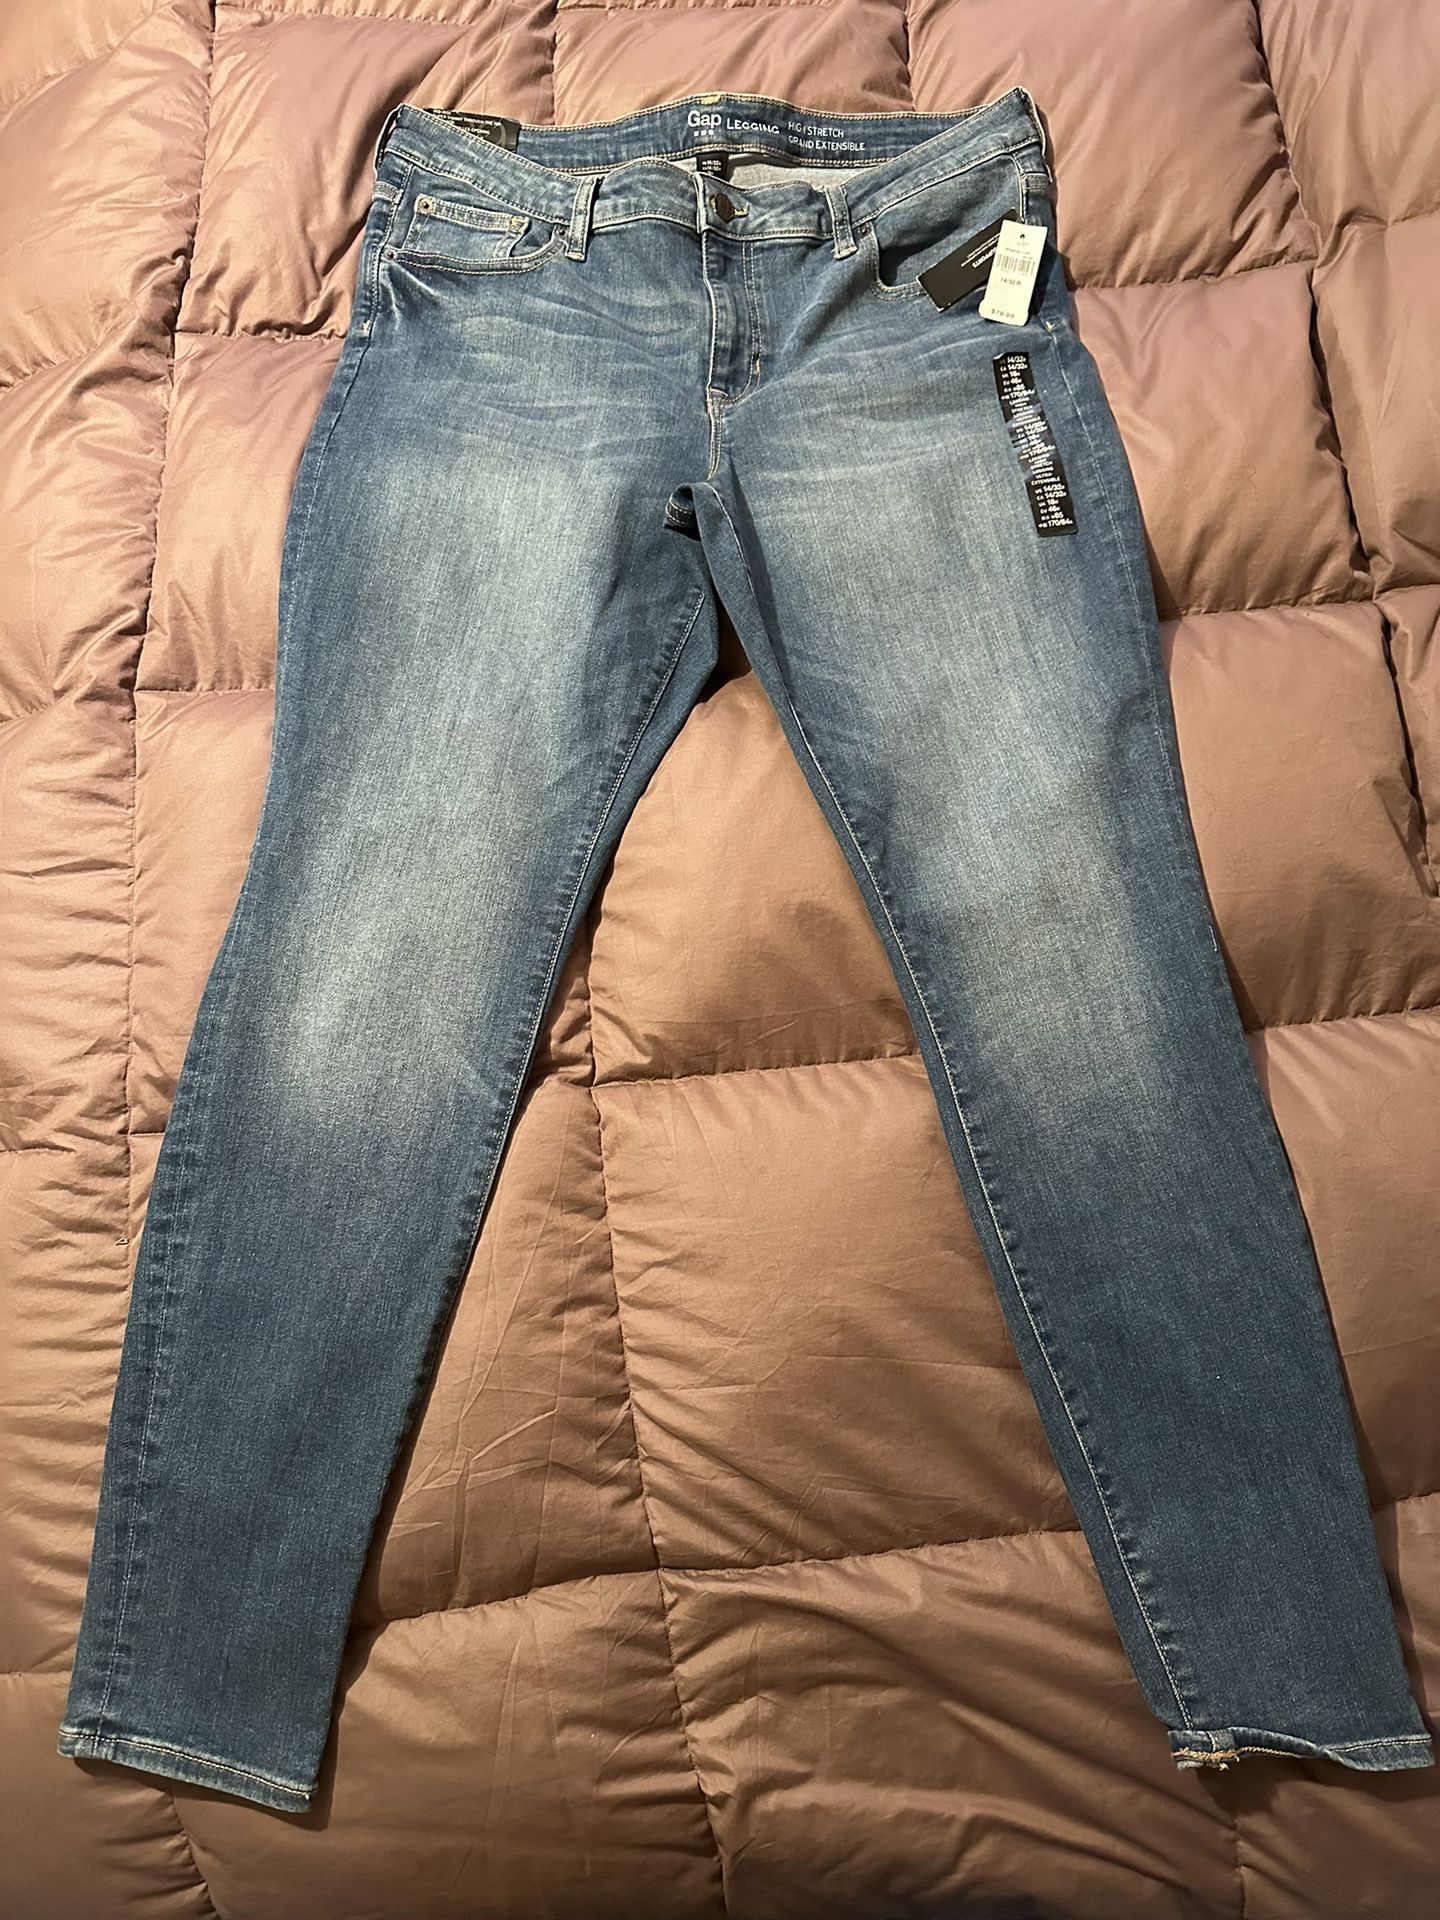 New Gap Woman’s Jeans